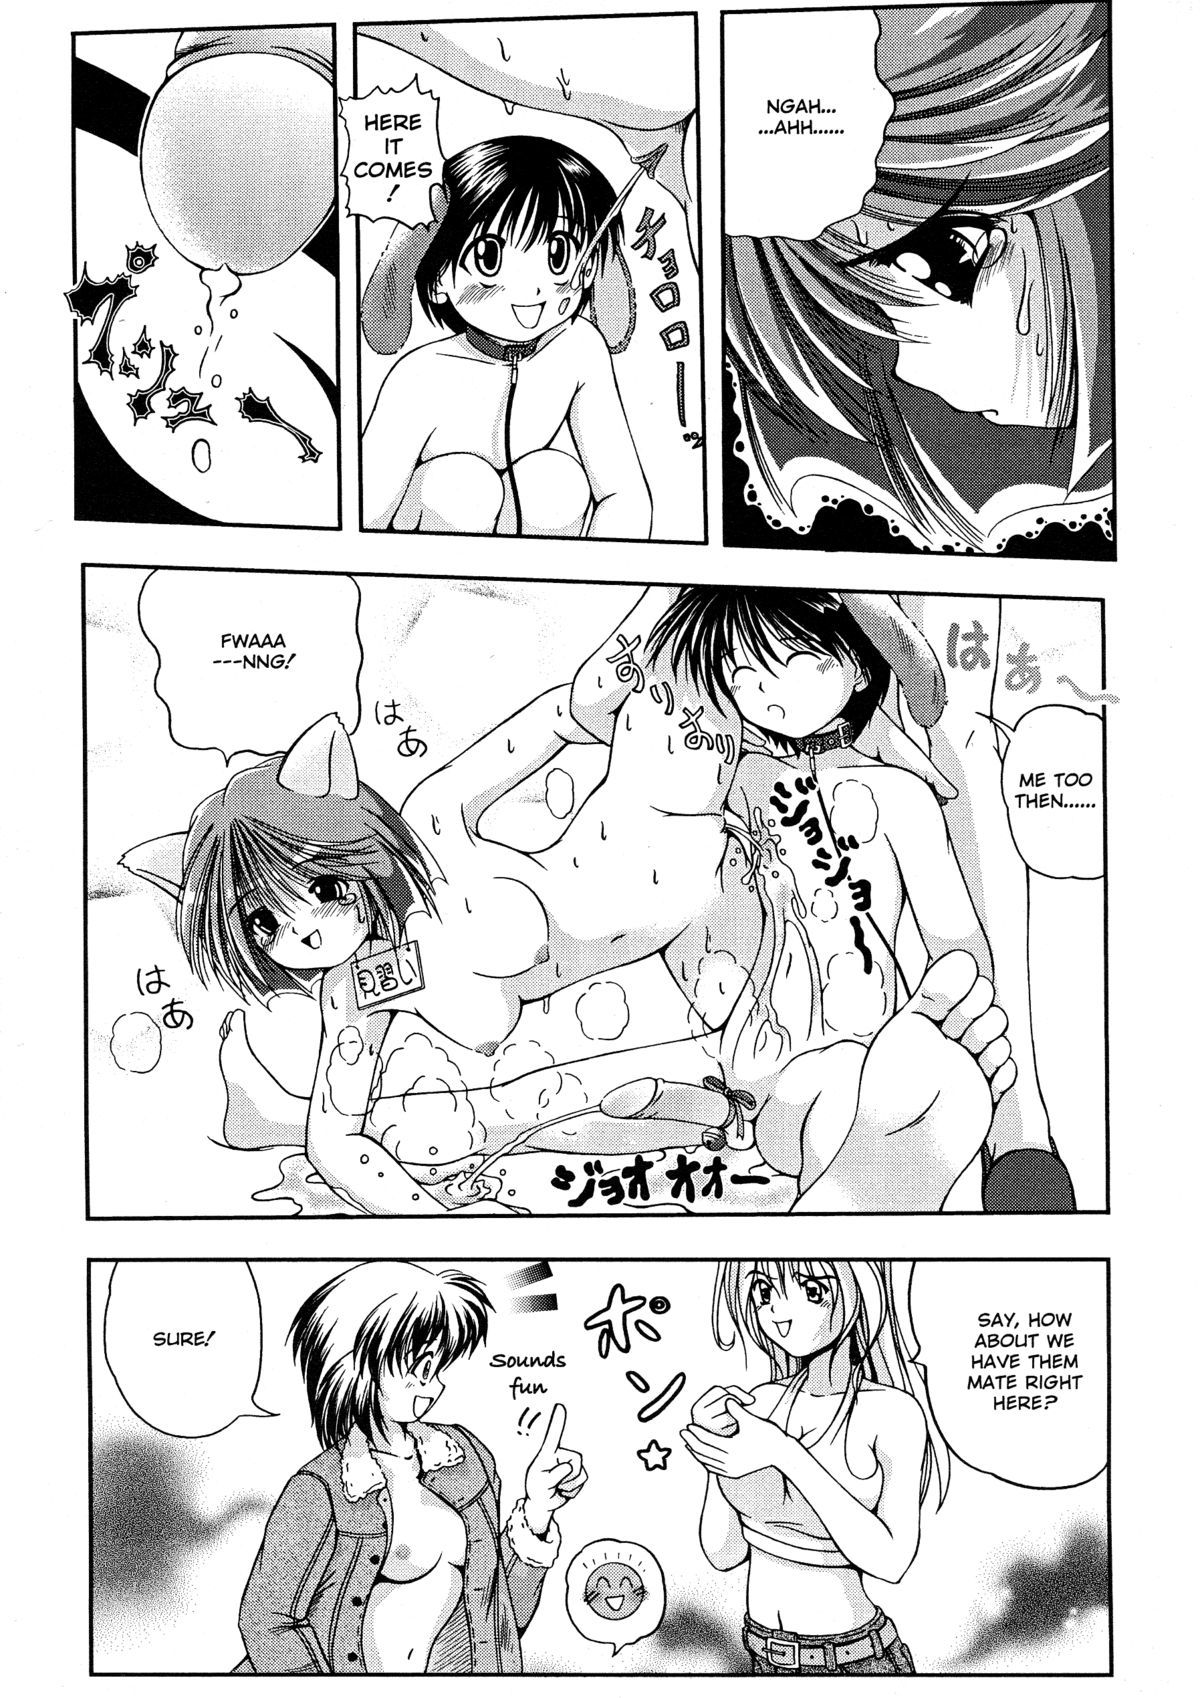 Flashbang!Hi-res 145 hentai manga